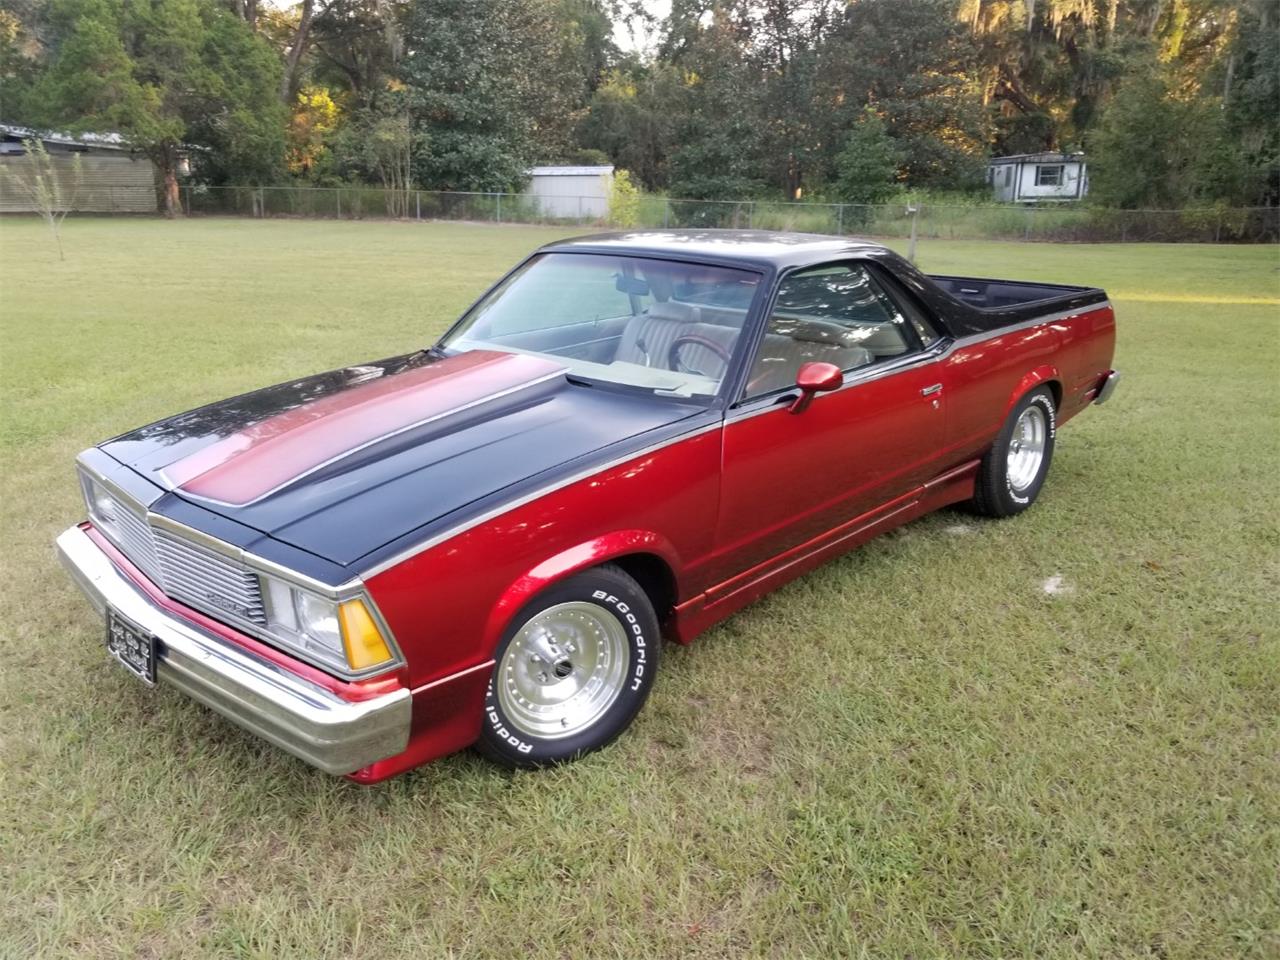 For Sale: 1981 Chevrolet El Camino in LAKE CITY, Florida.